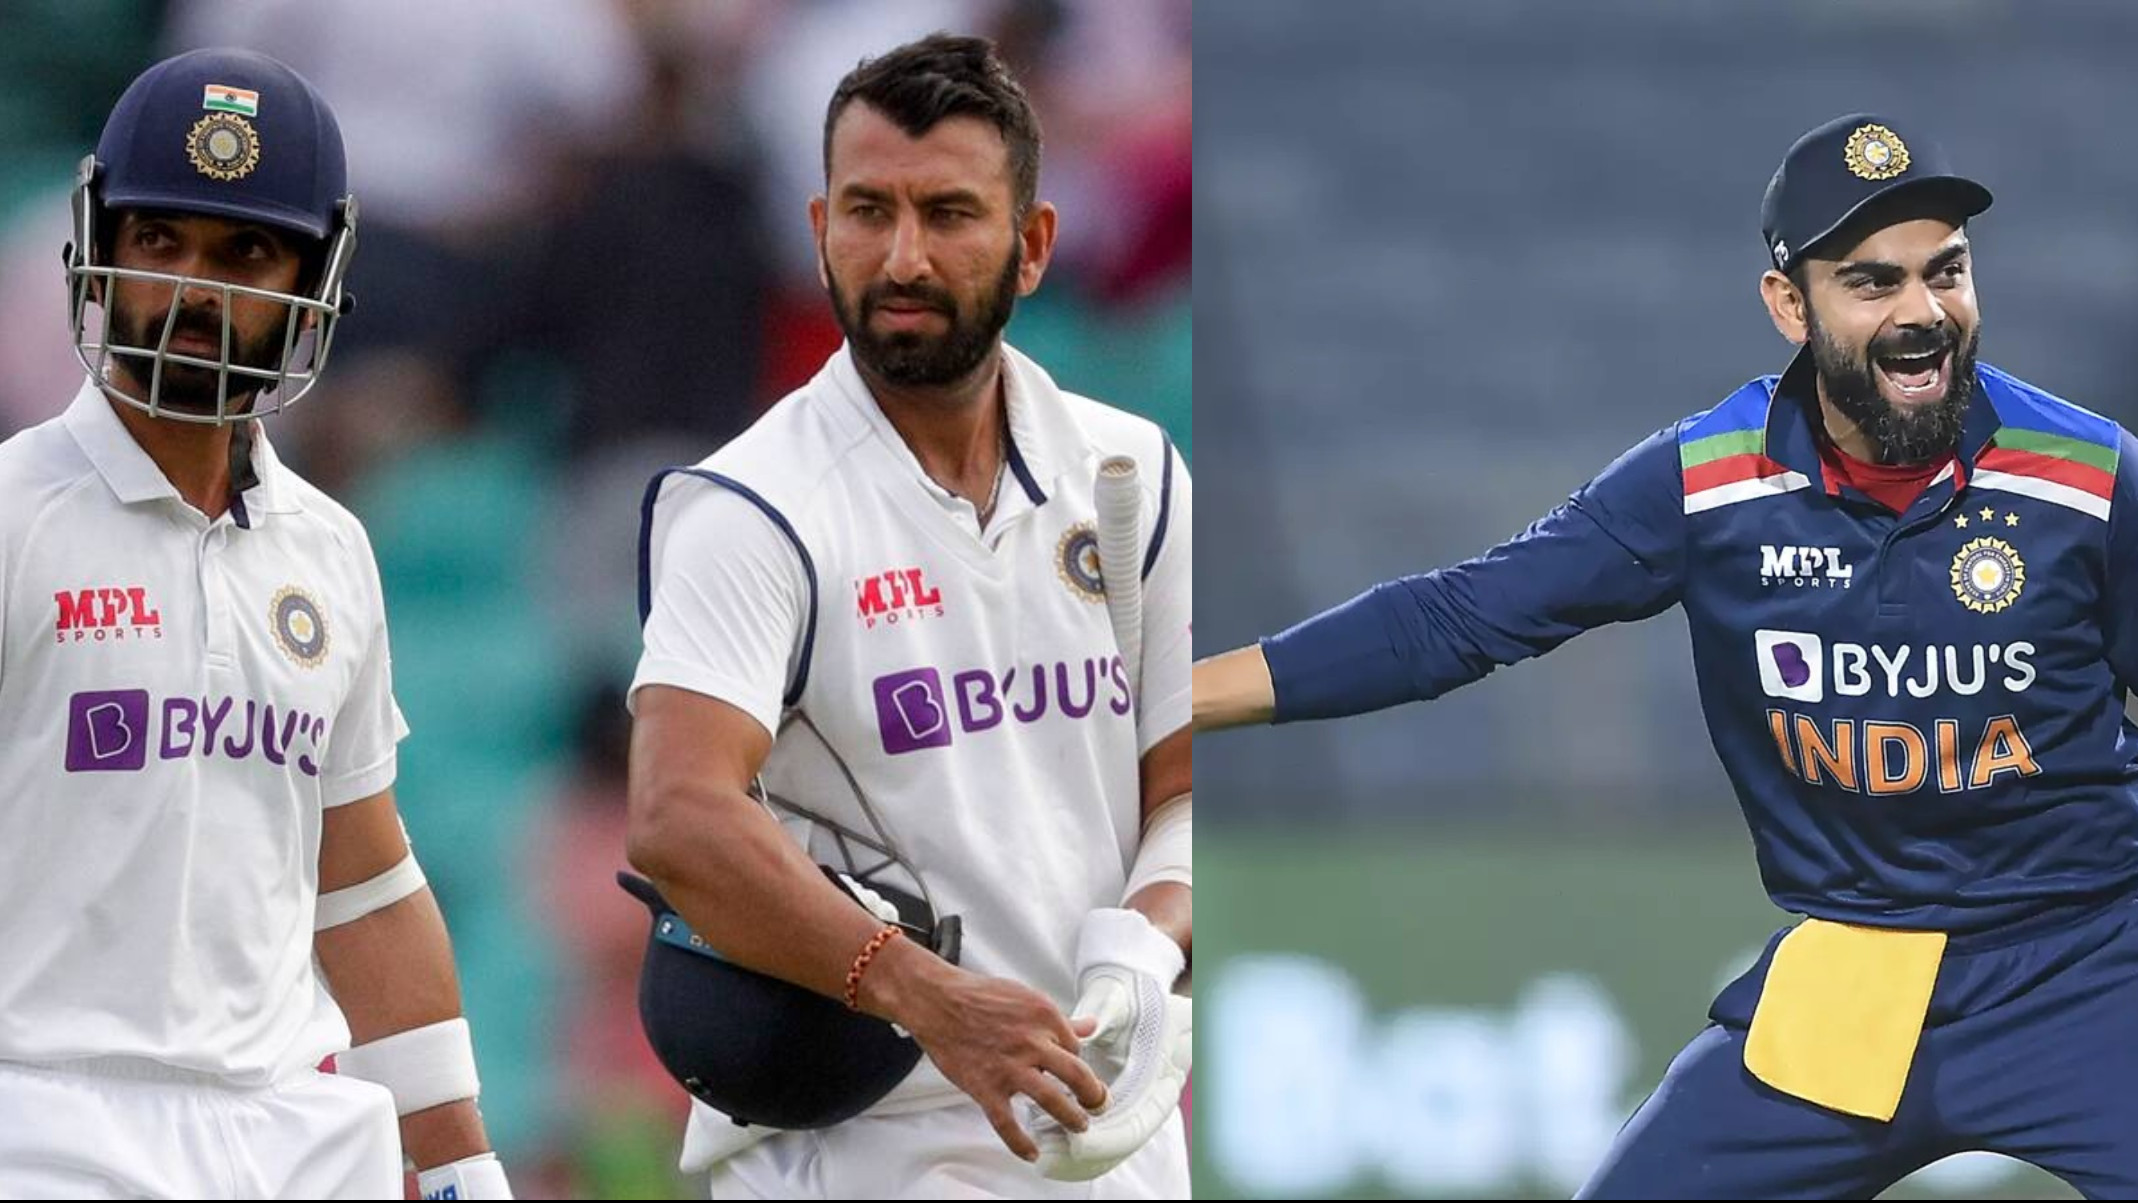 SA v IND 2021-22: Rahane, Pujara, Ishant set to be picked for Tests; Kohli likely to retain ODI captaincy- Report